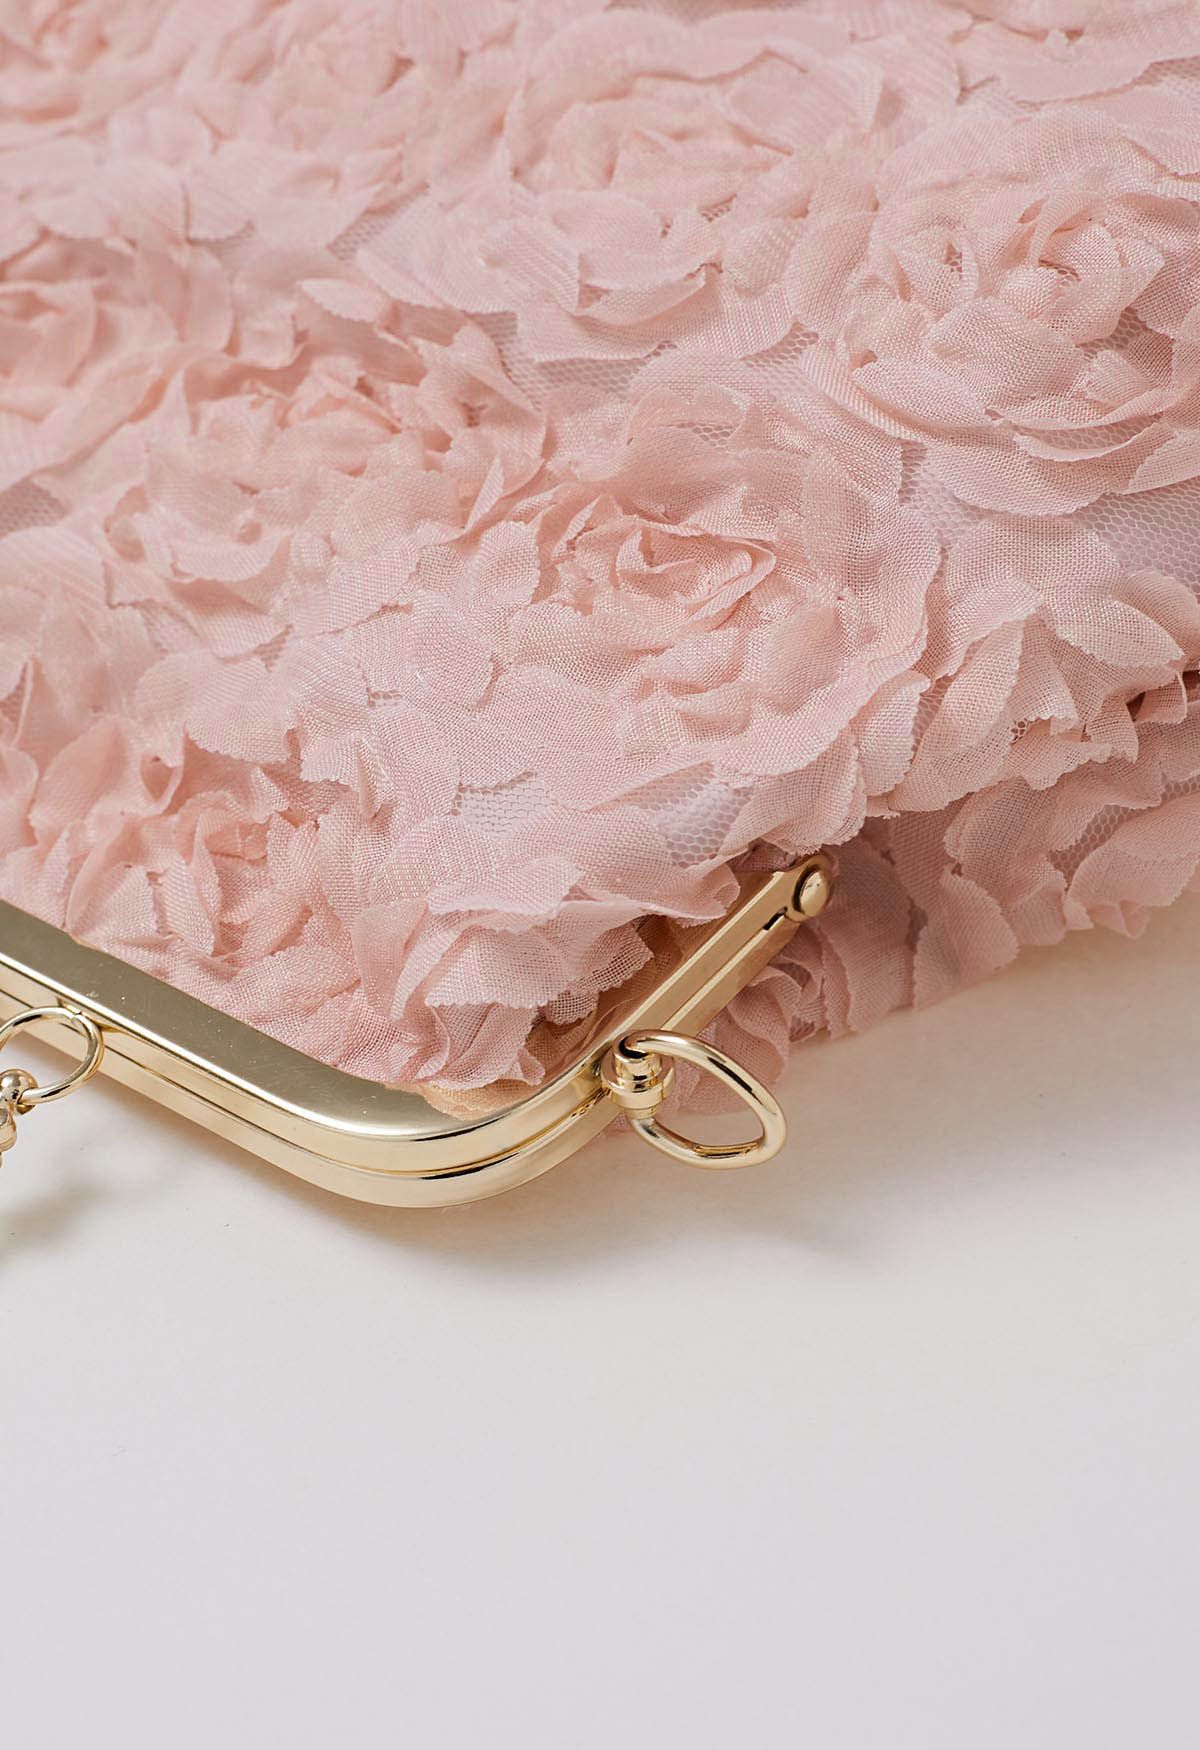 Elegant Rose Petal Clutch in Pink